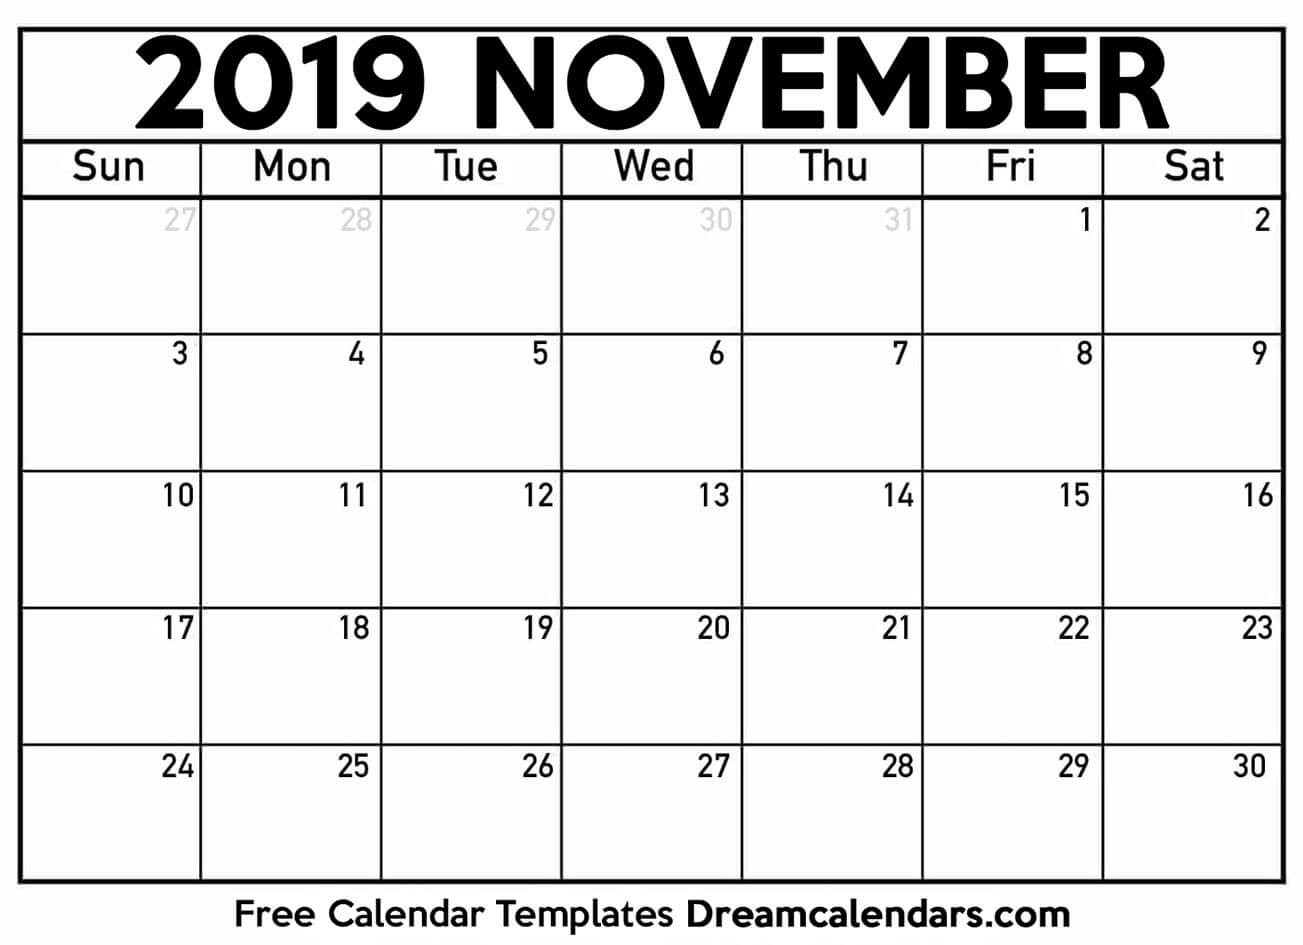 november-2019-calendar-free-blank-printable-with-holidays